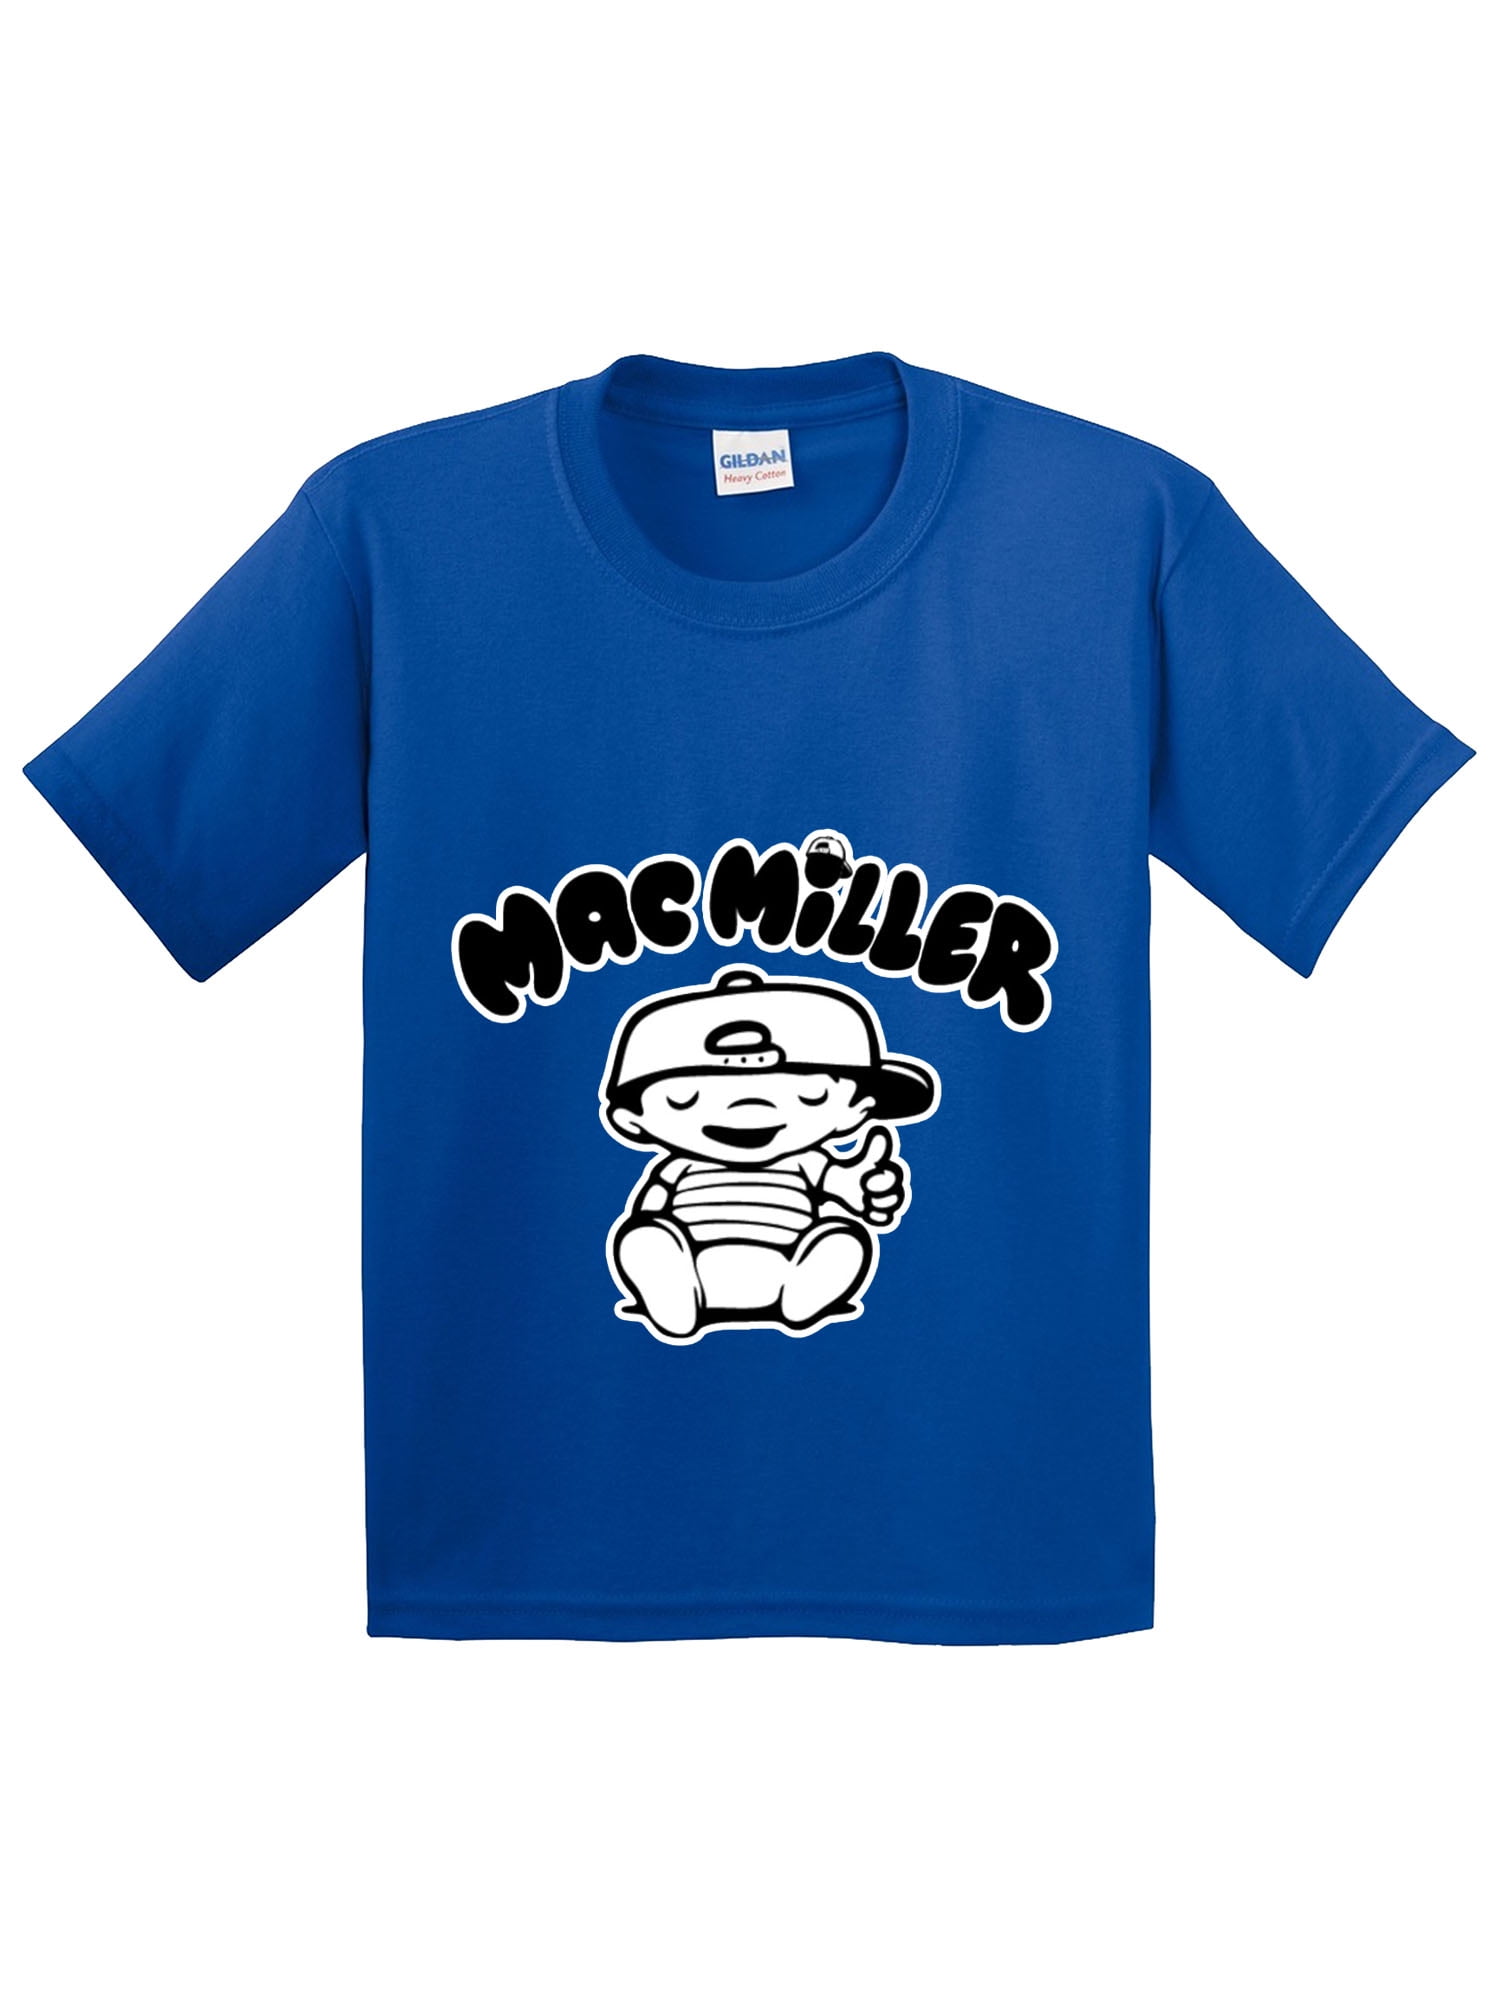 New Way 961 - Youth T-Shirt Mac Miller RIP Rapper Hip-Hop Medium Royal Blue - Walmart.com1500 x 2000